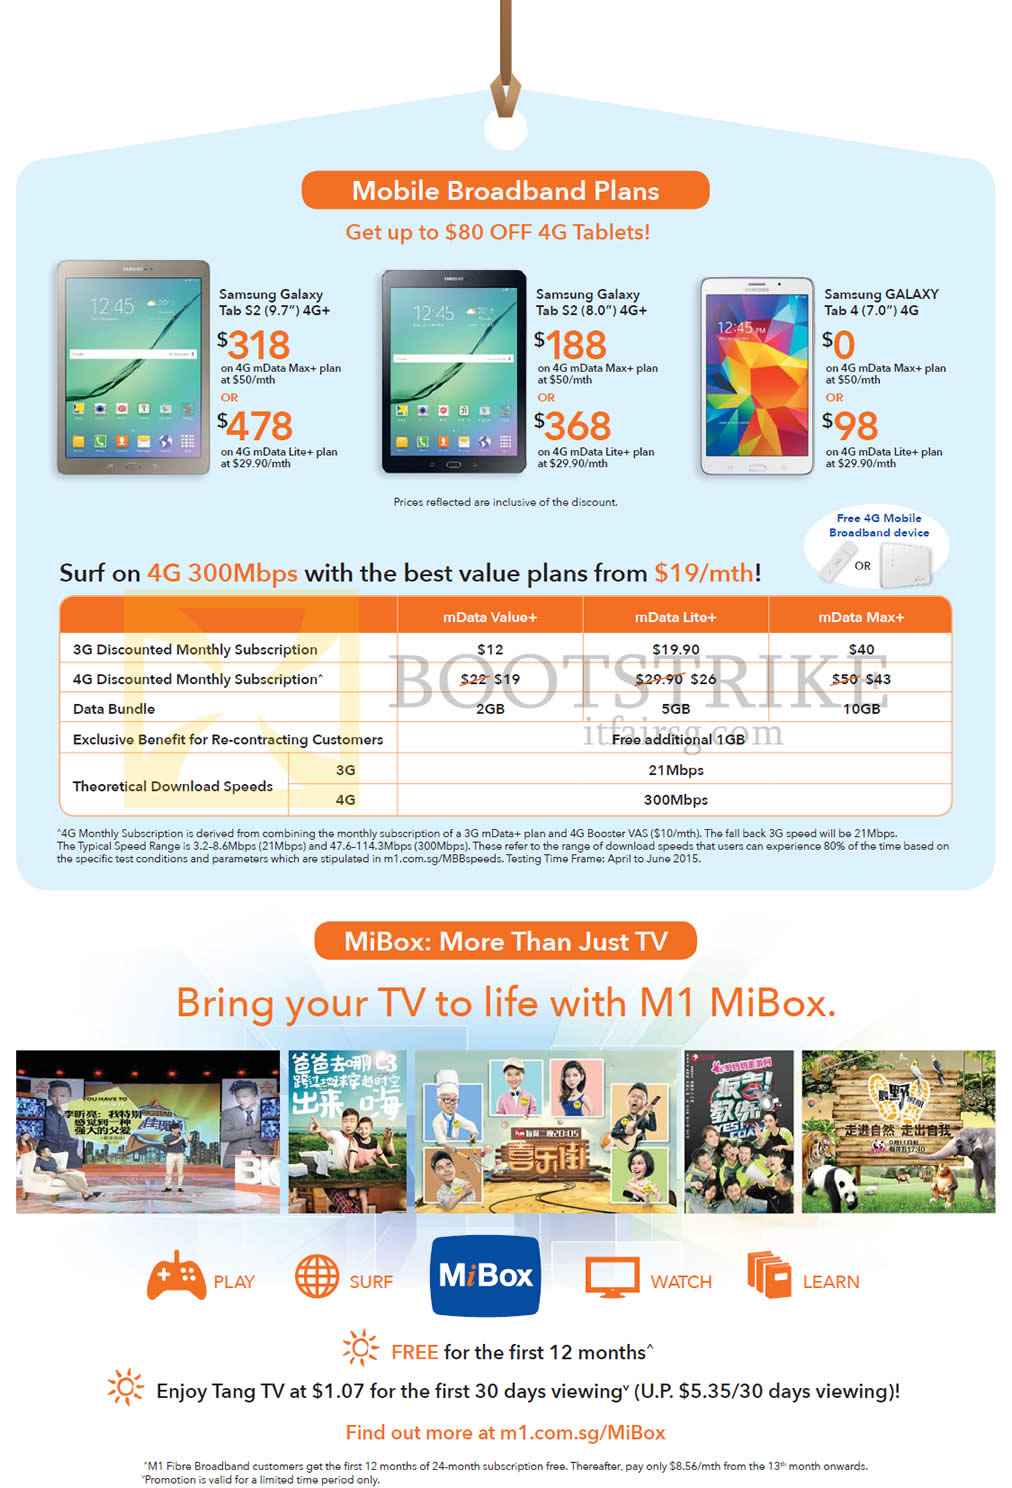 COMEX 2015 price list image brochure of M1 Samsung Galaxy Tab S2 9.7, Samsung Galaxy Tab S2 8.0, Samsung GALAXY Tab 4 7.0, MiBox, 4G 300Mbps, MData Value, Lite, Max Plus